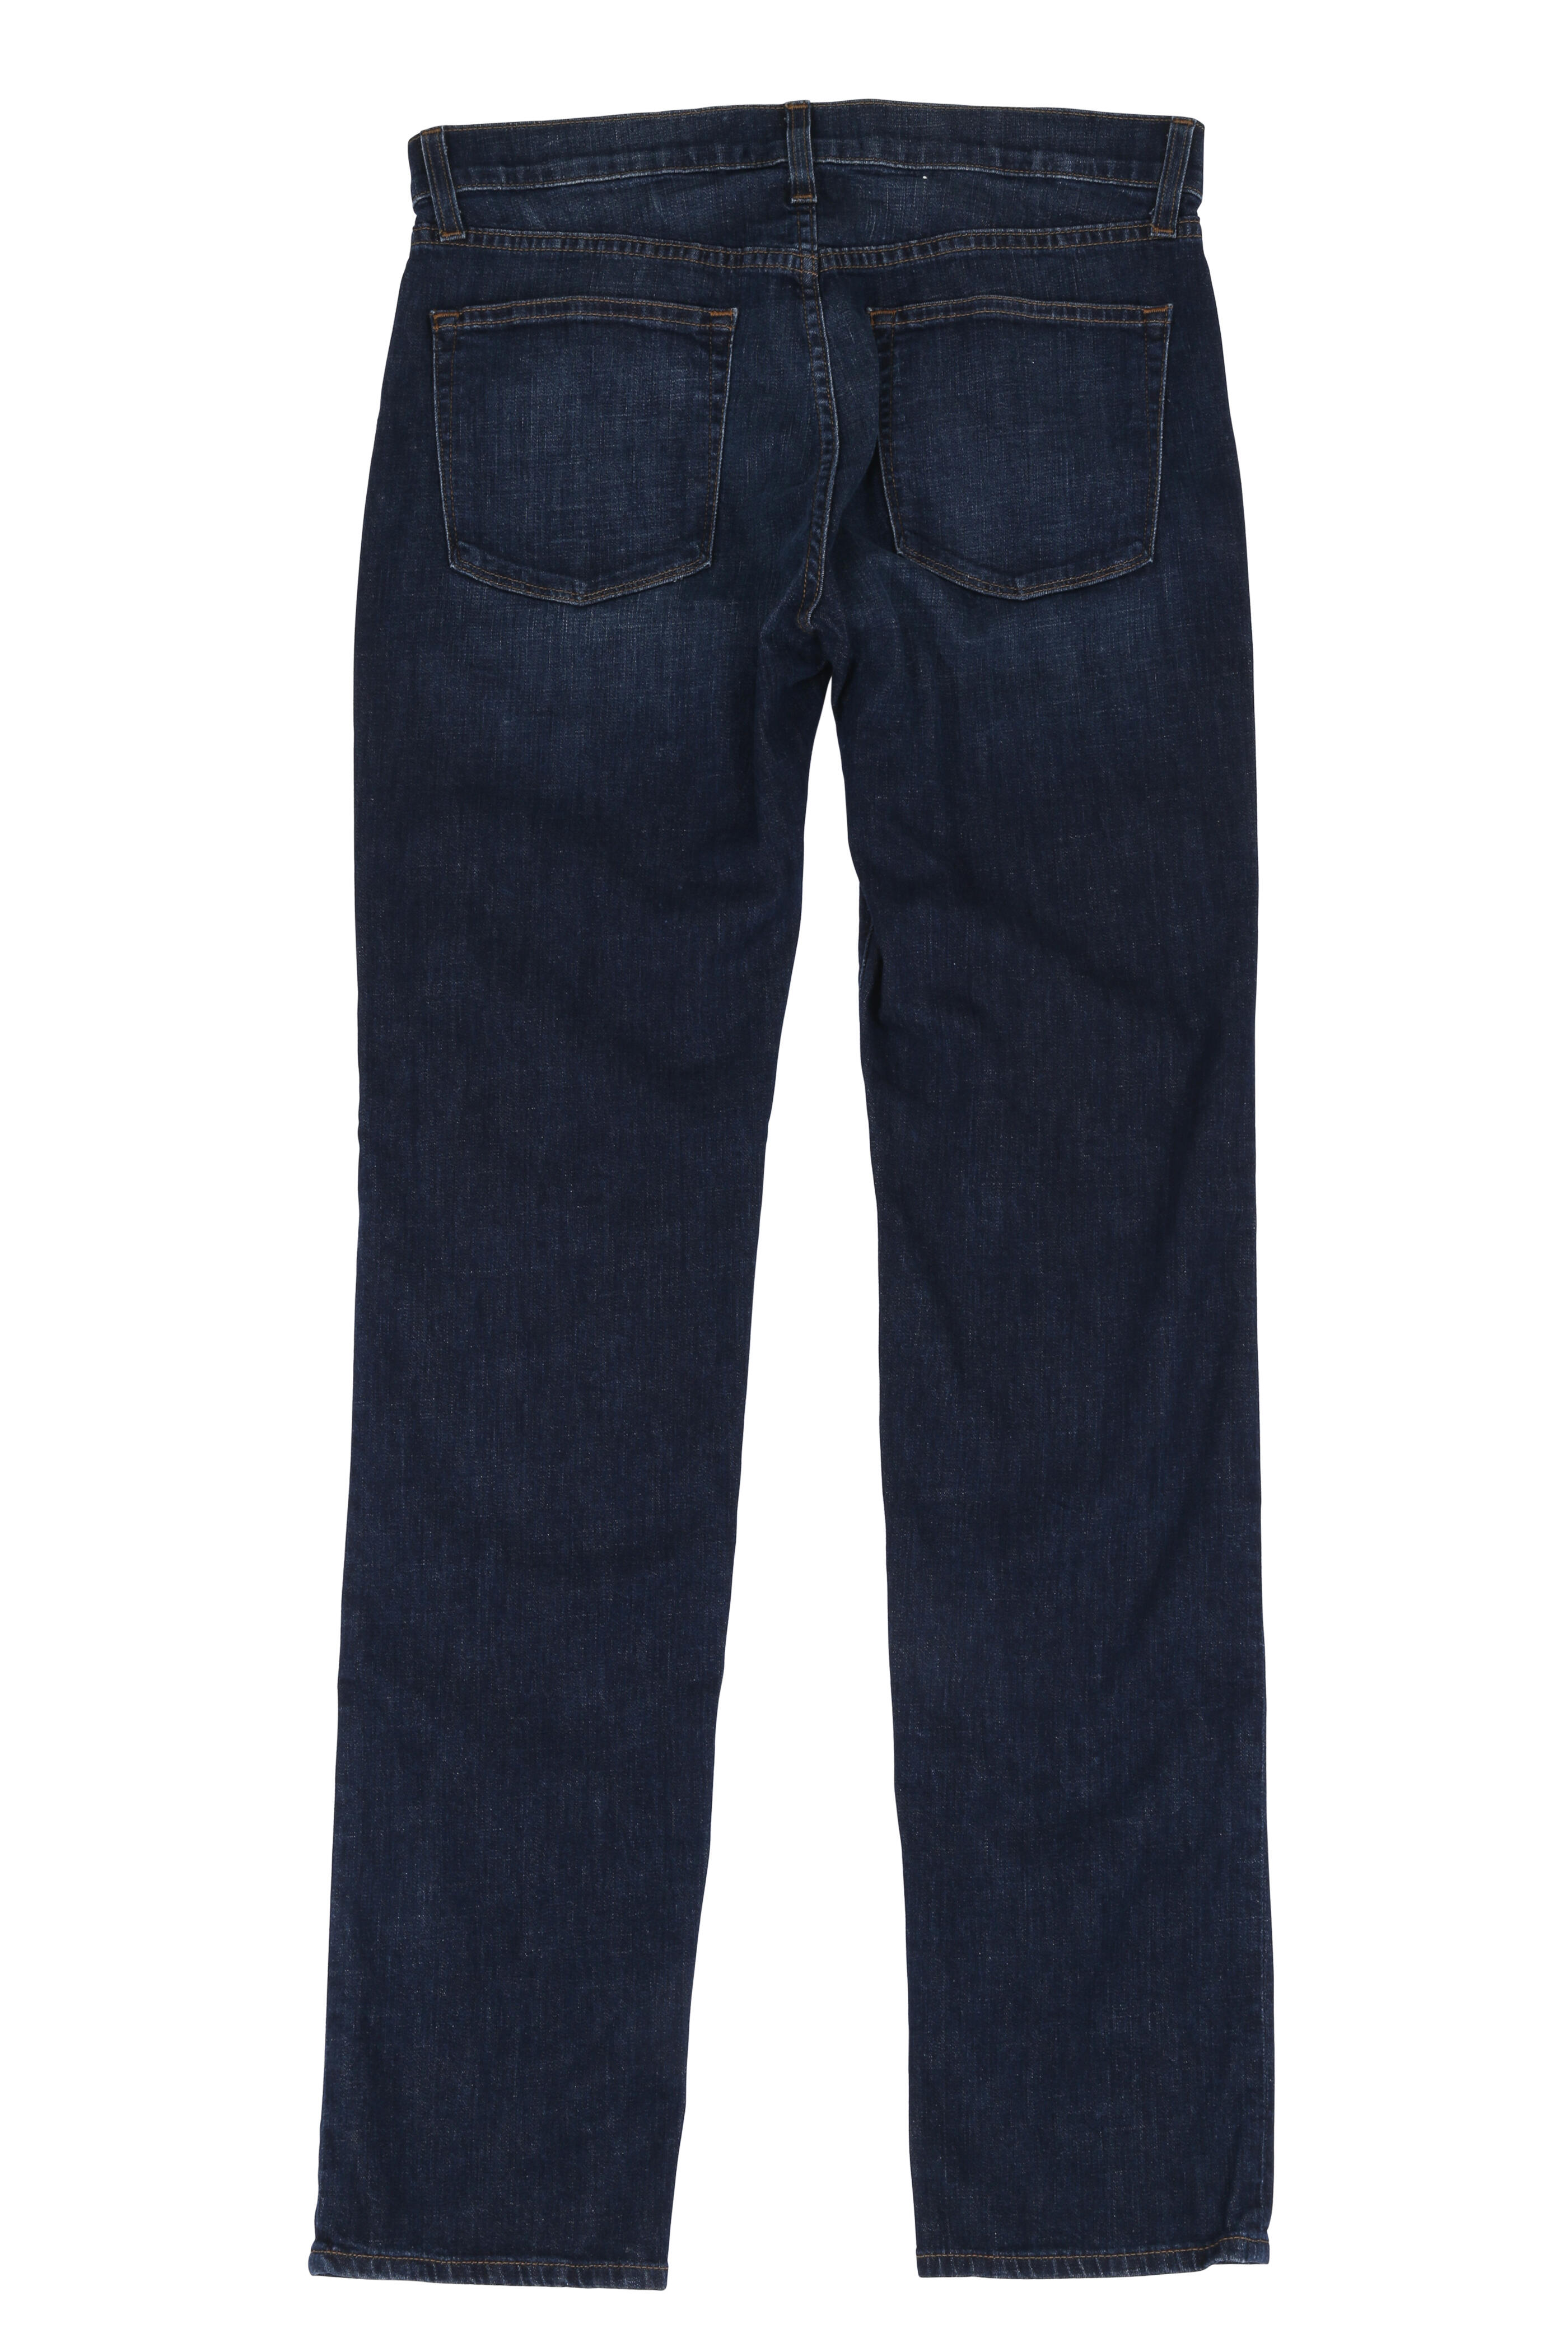 J Brand Kane Jeans Mens 36 Navy Blue Denim Slim Straight Leg Dark